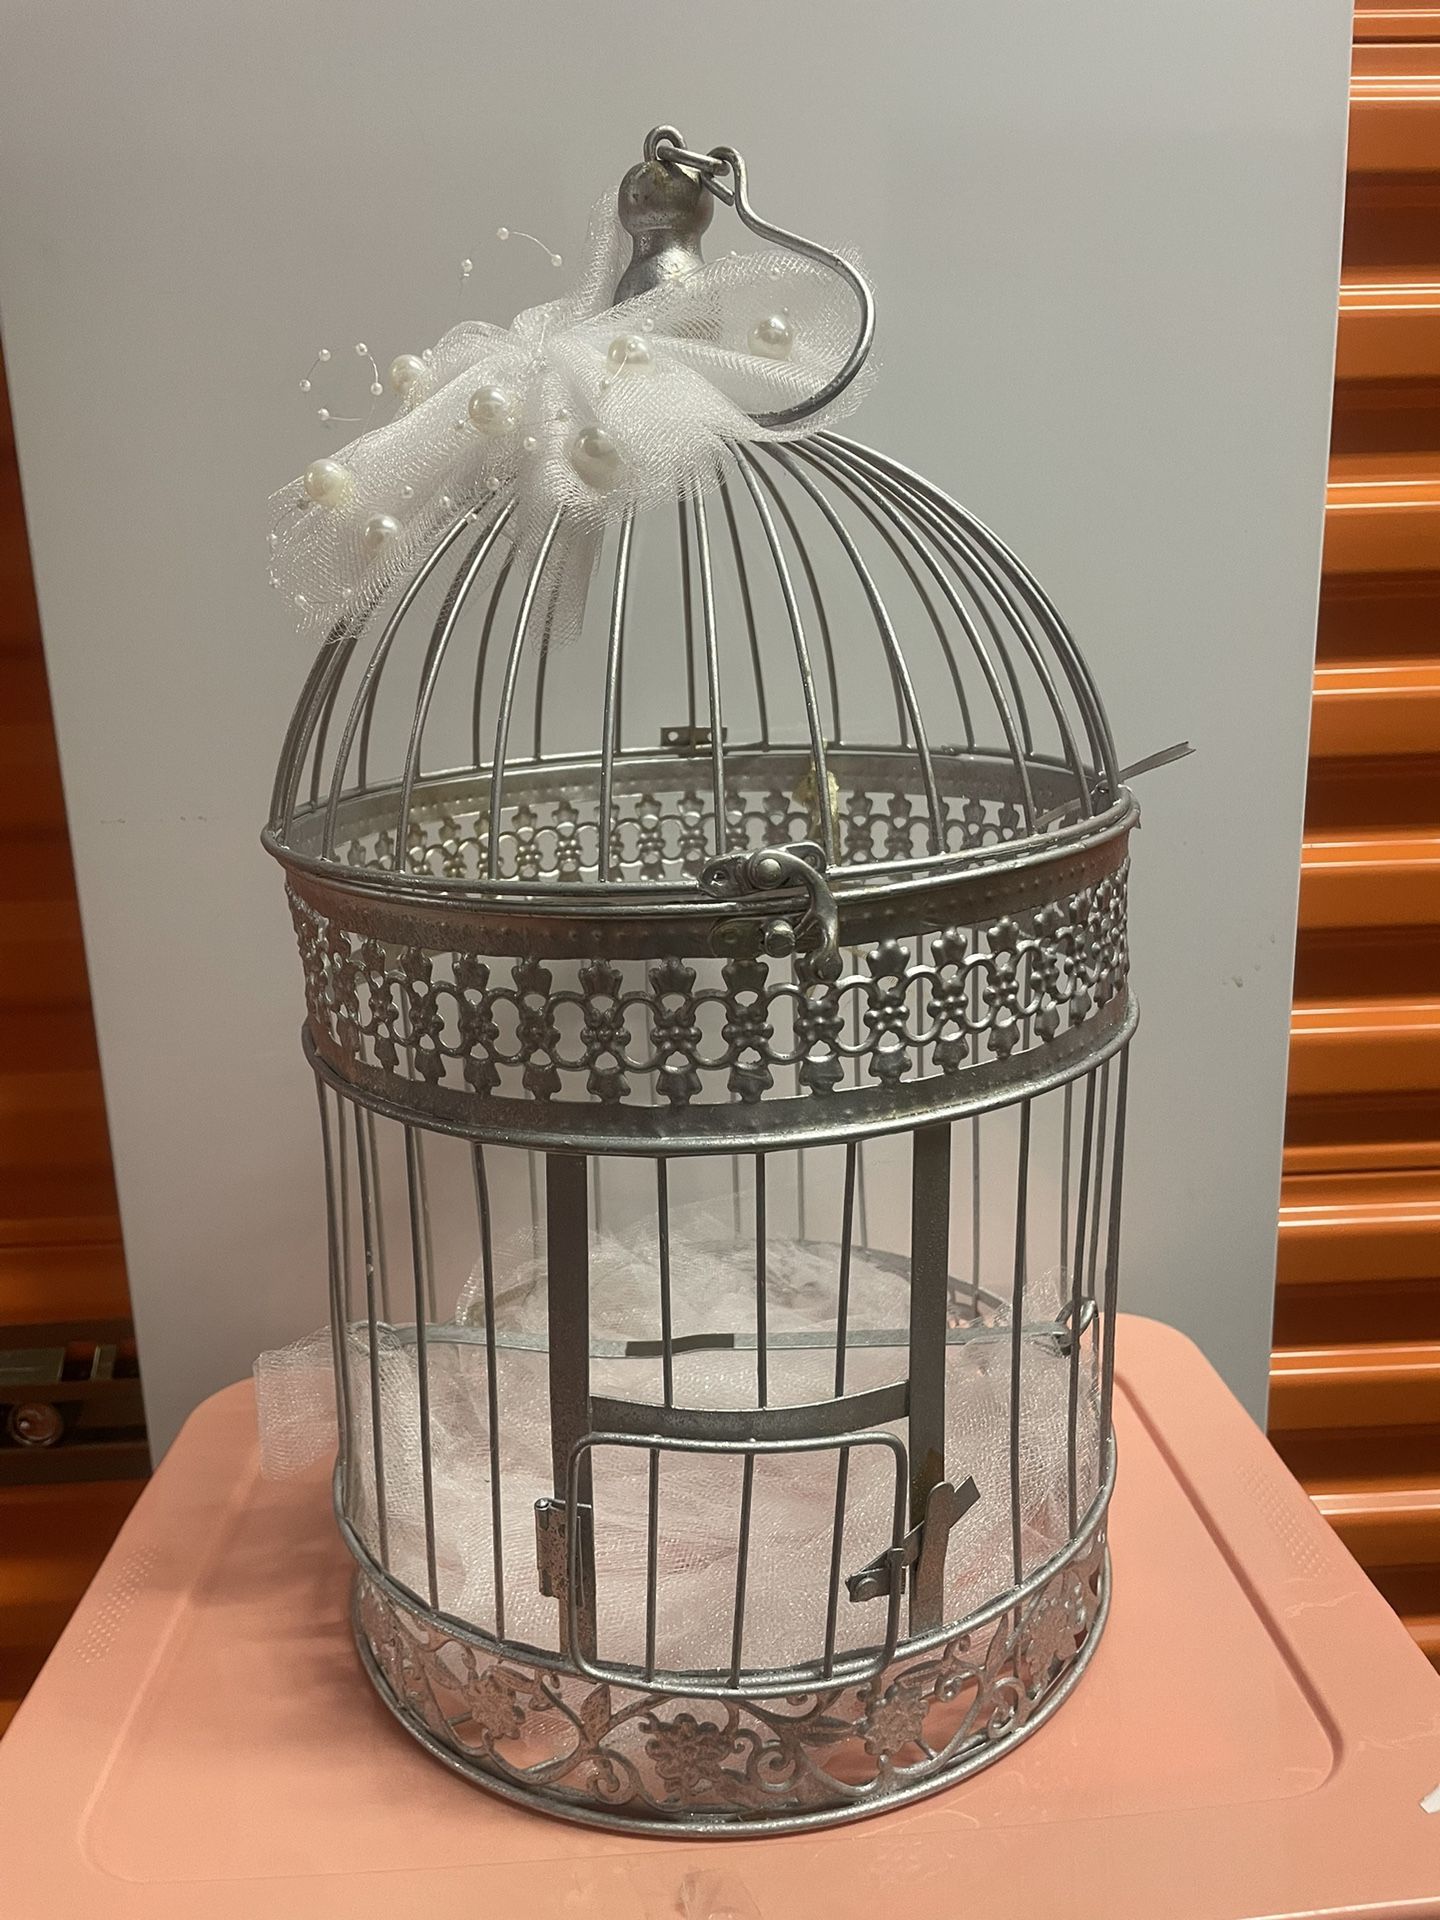 Decorative weeding cage $20